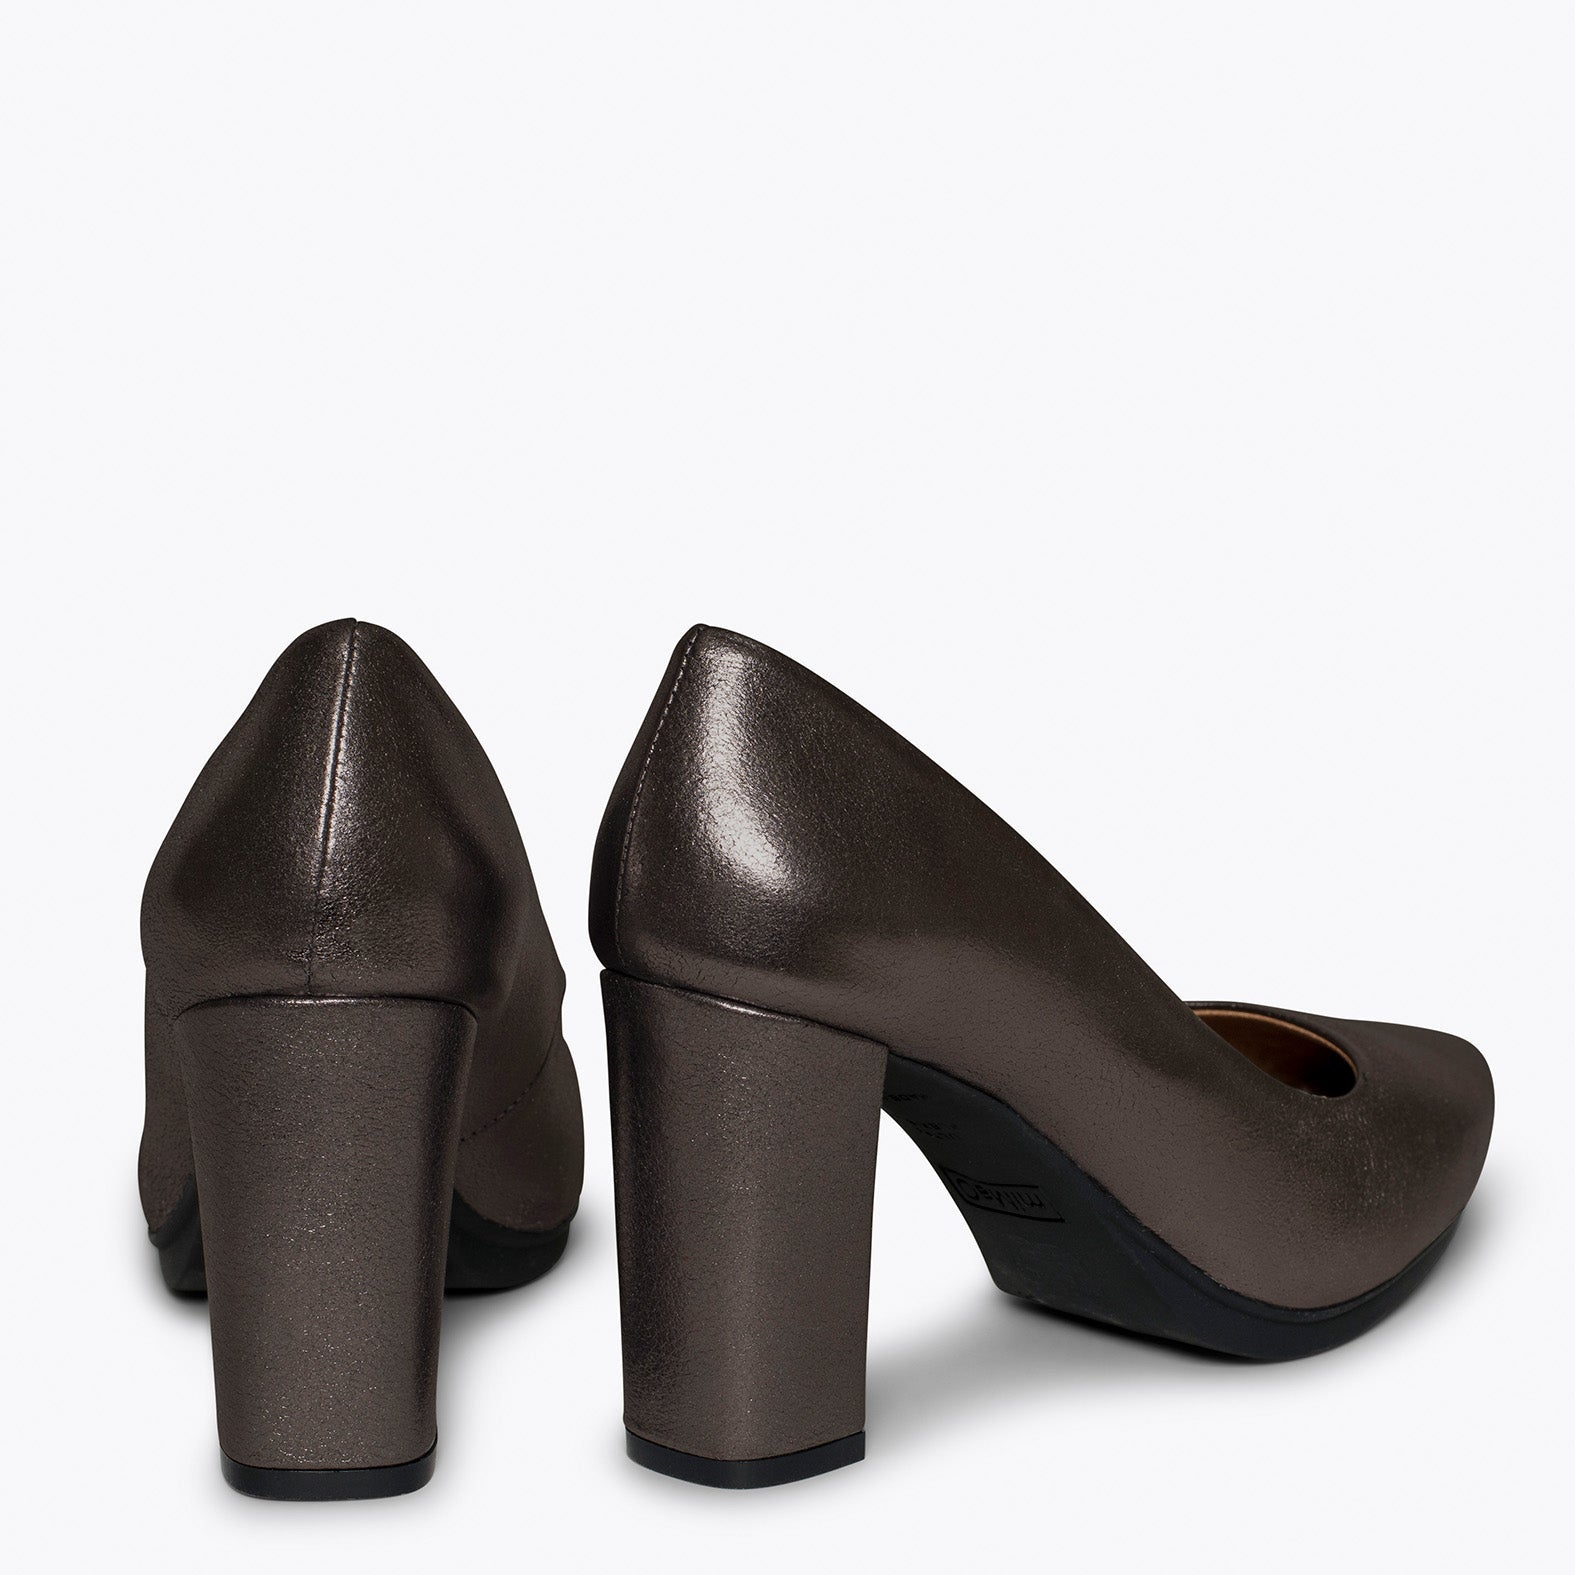 URBAN SPLASH – SILVER metallic leather high heel